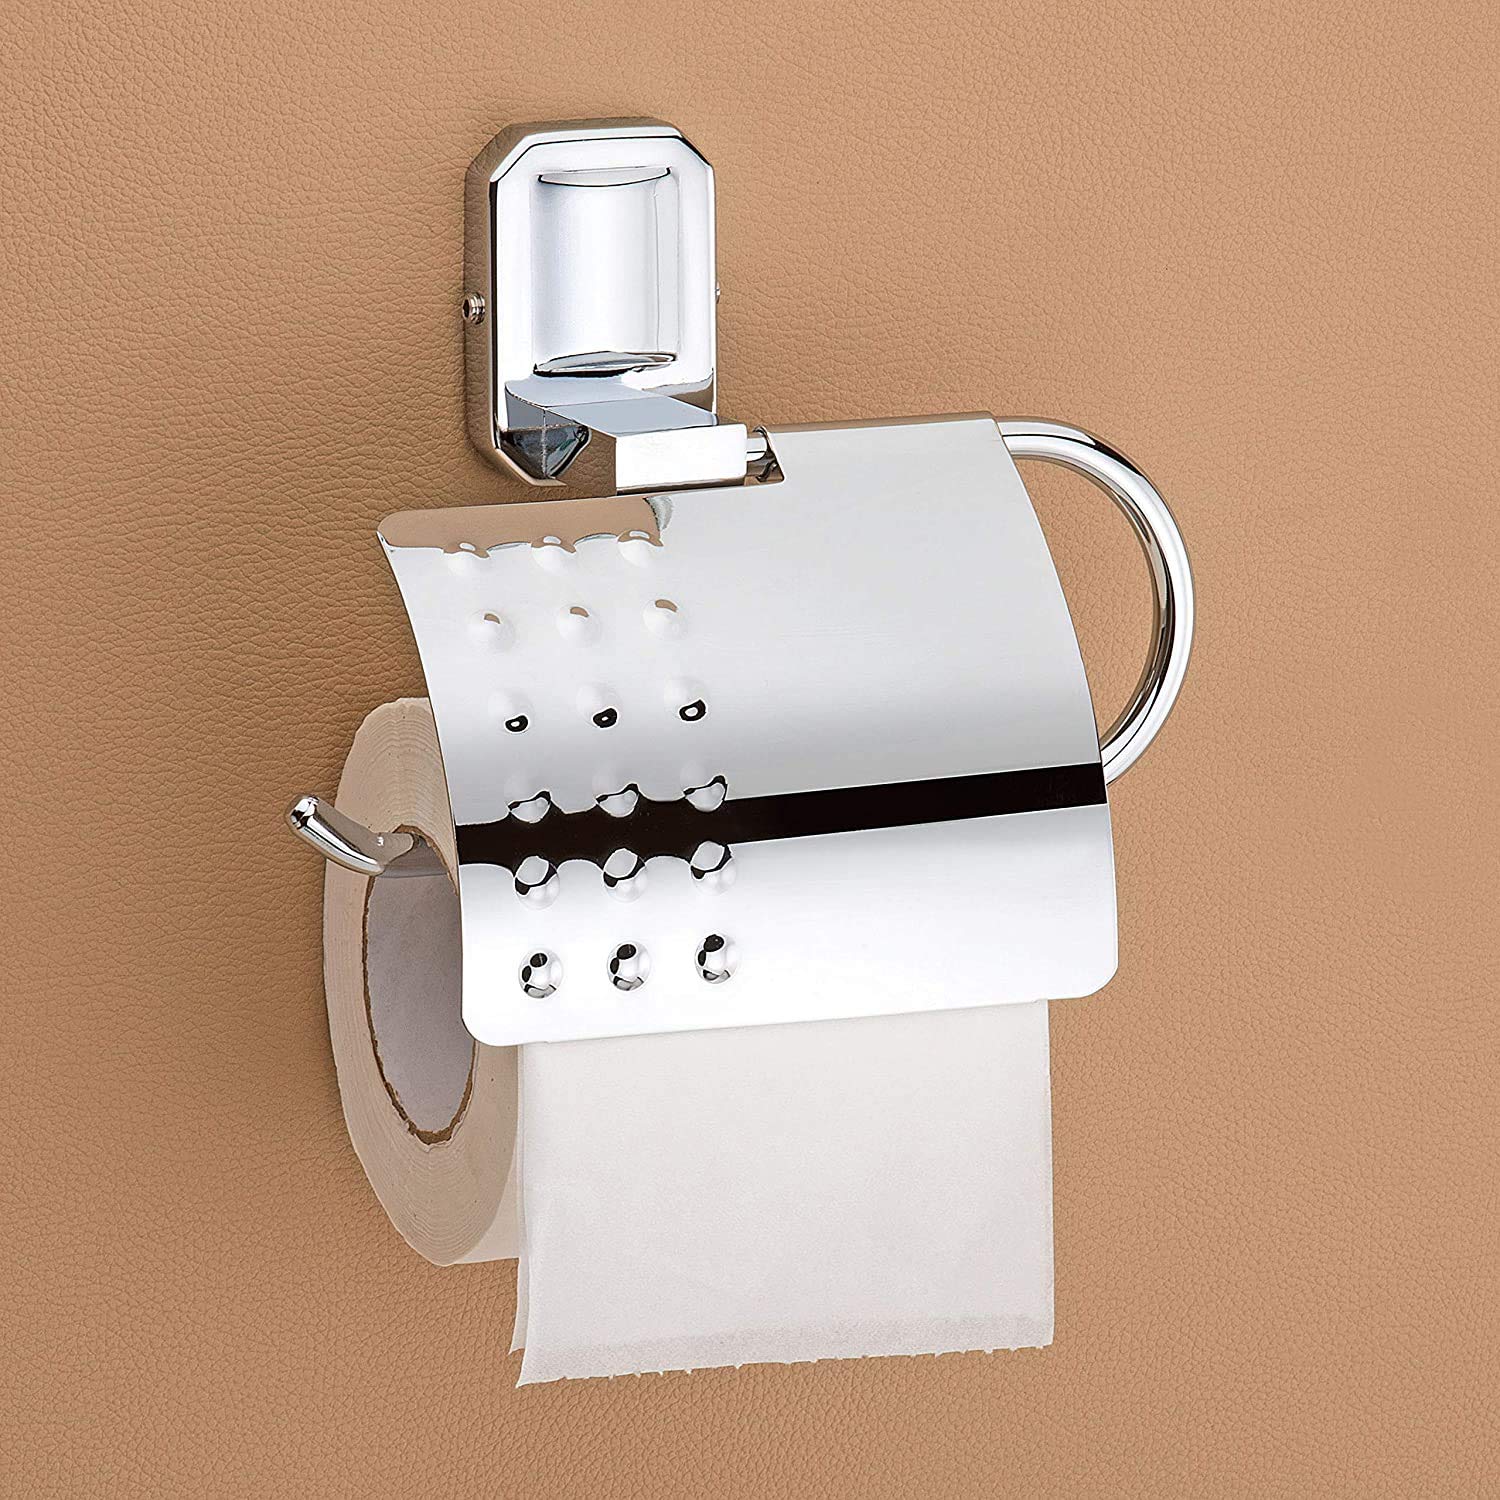 Plantex Platinum Stainless Steel 304 Grade Cute Toilet Paper Roll Holder/Toilet Paper Holder in Bathroom/Kitchen/Bathroom Accessories(Chrome) - Pack of 3